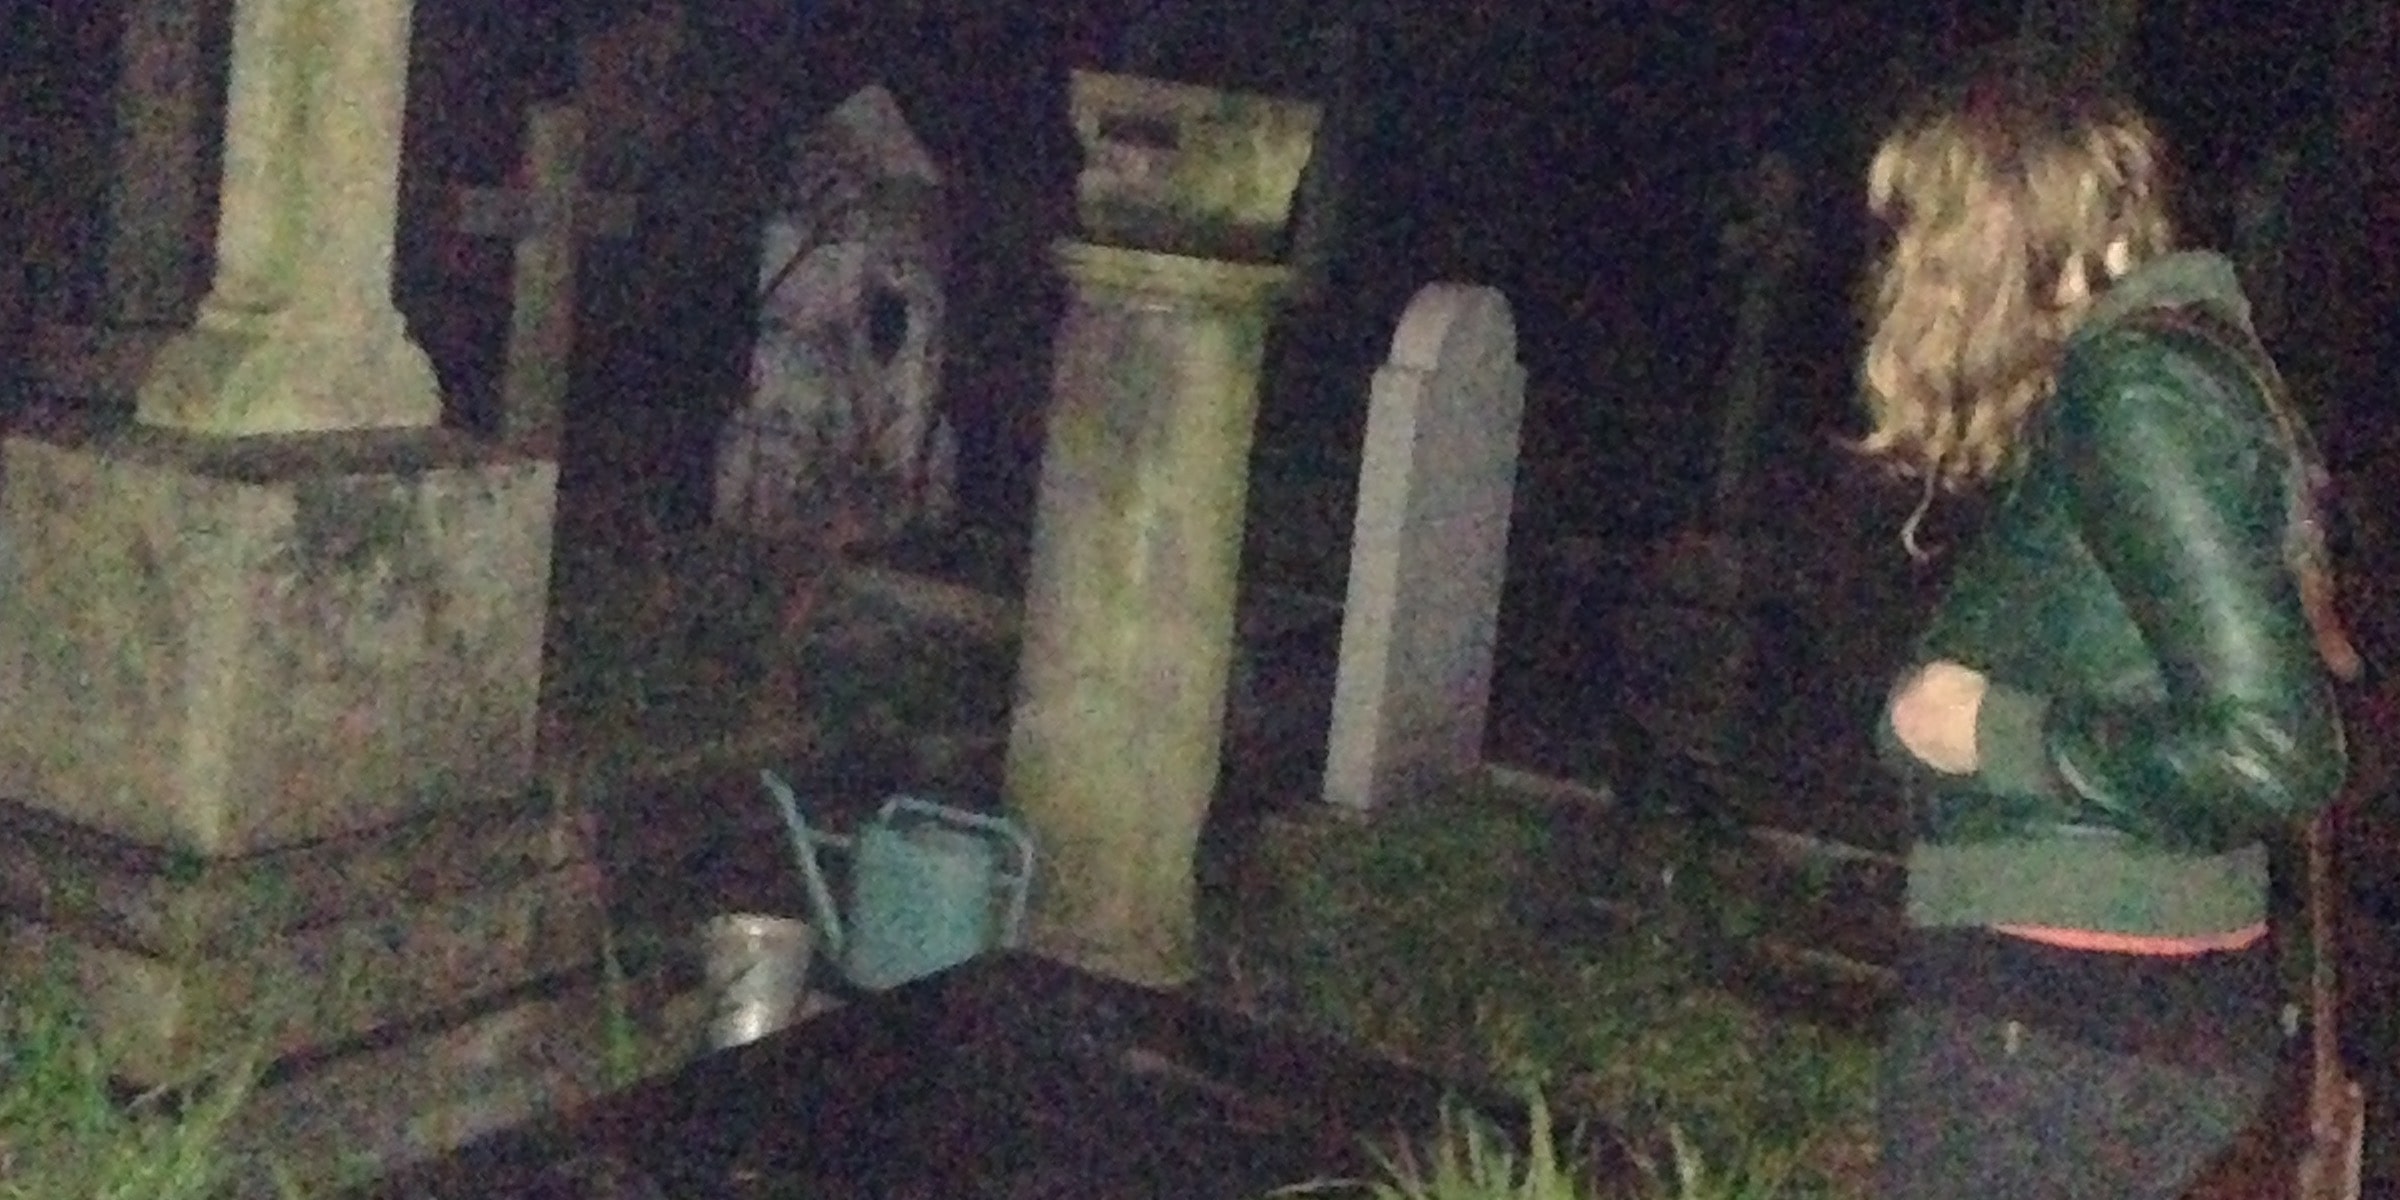 Photo of Eva looking at a gravestone